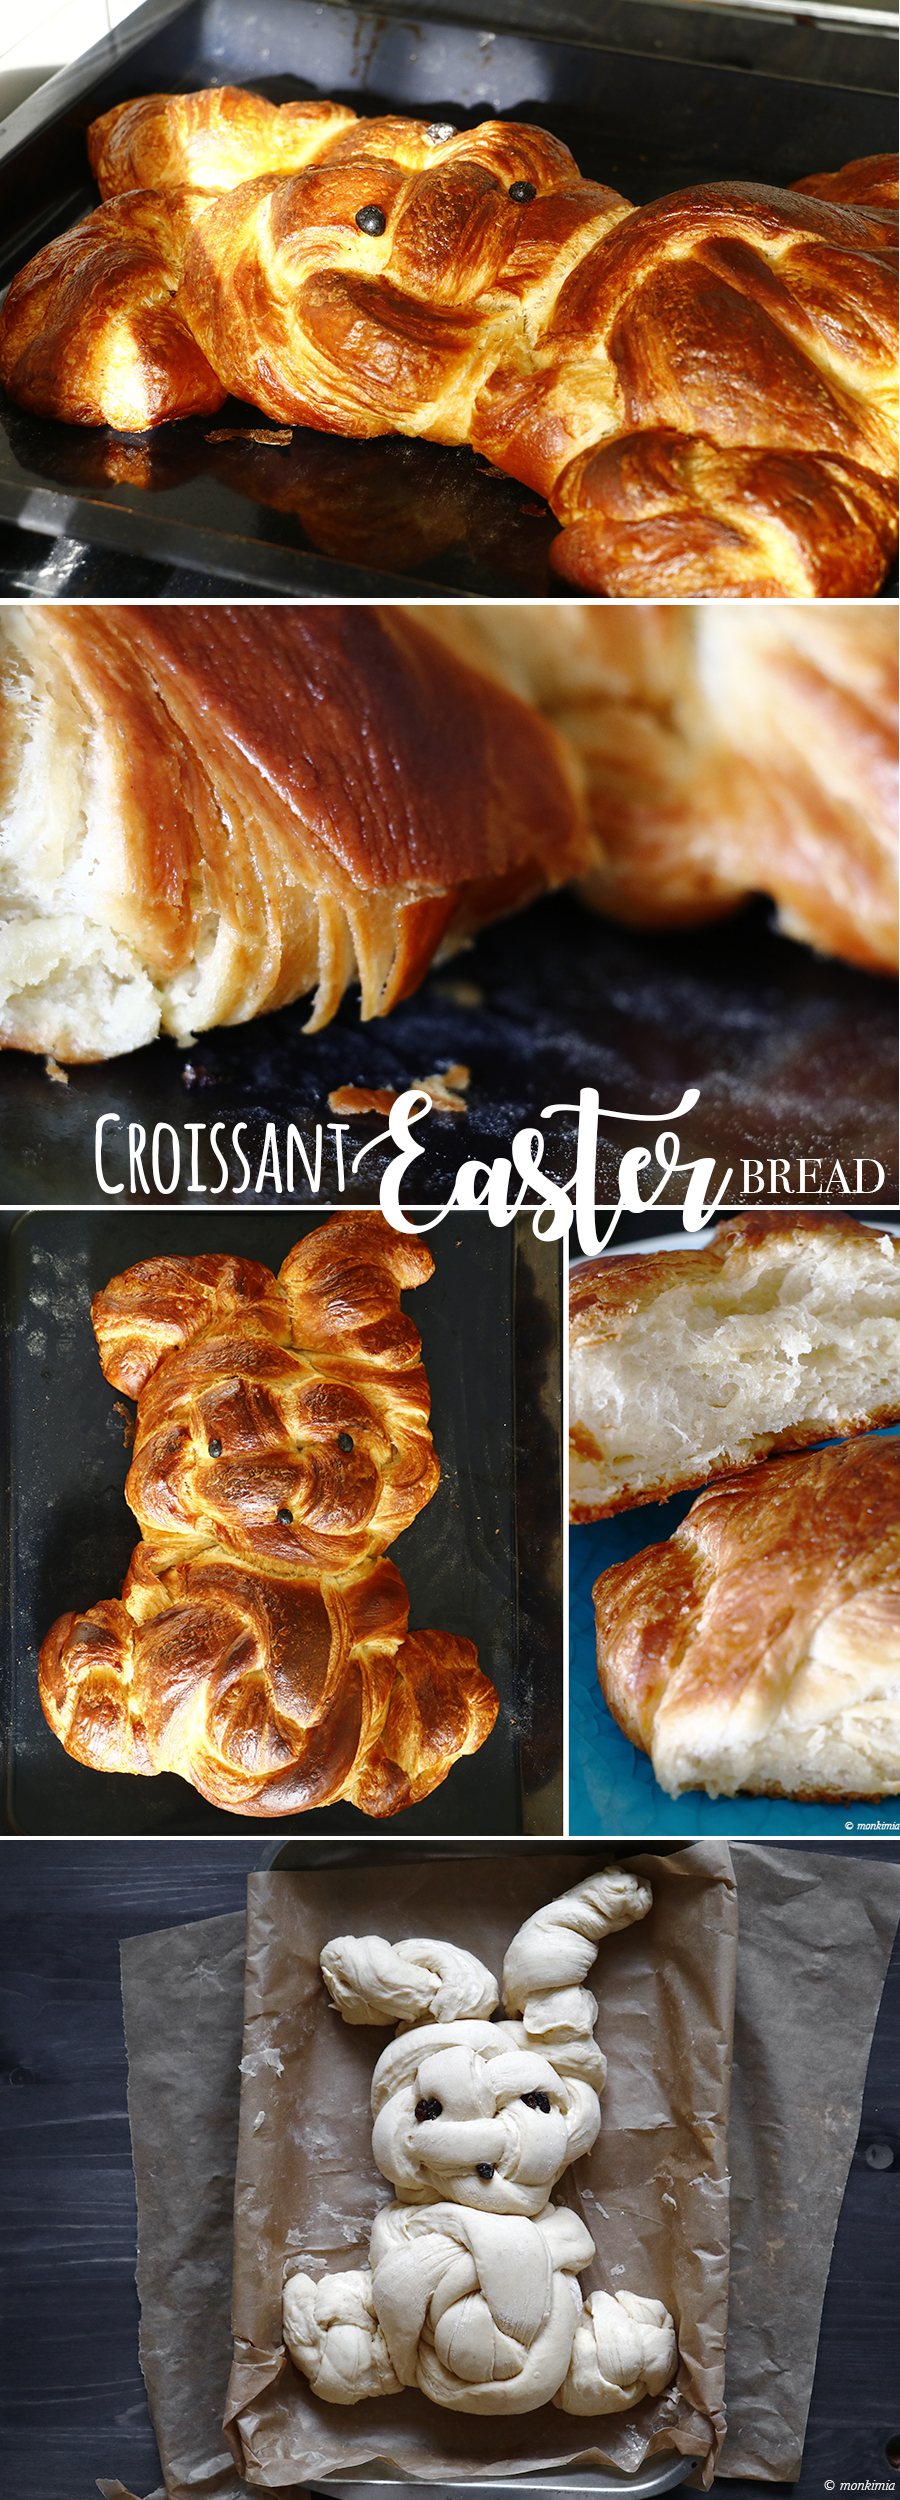 Croissant easter bread recipe